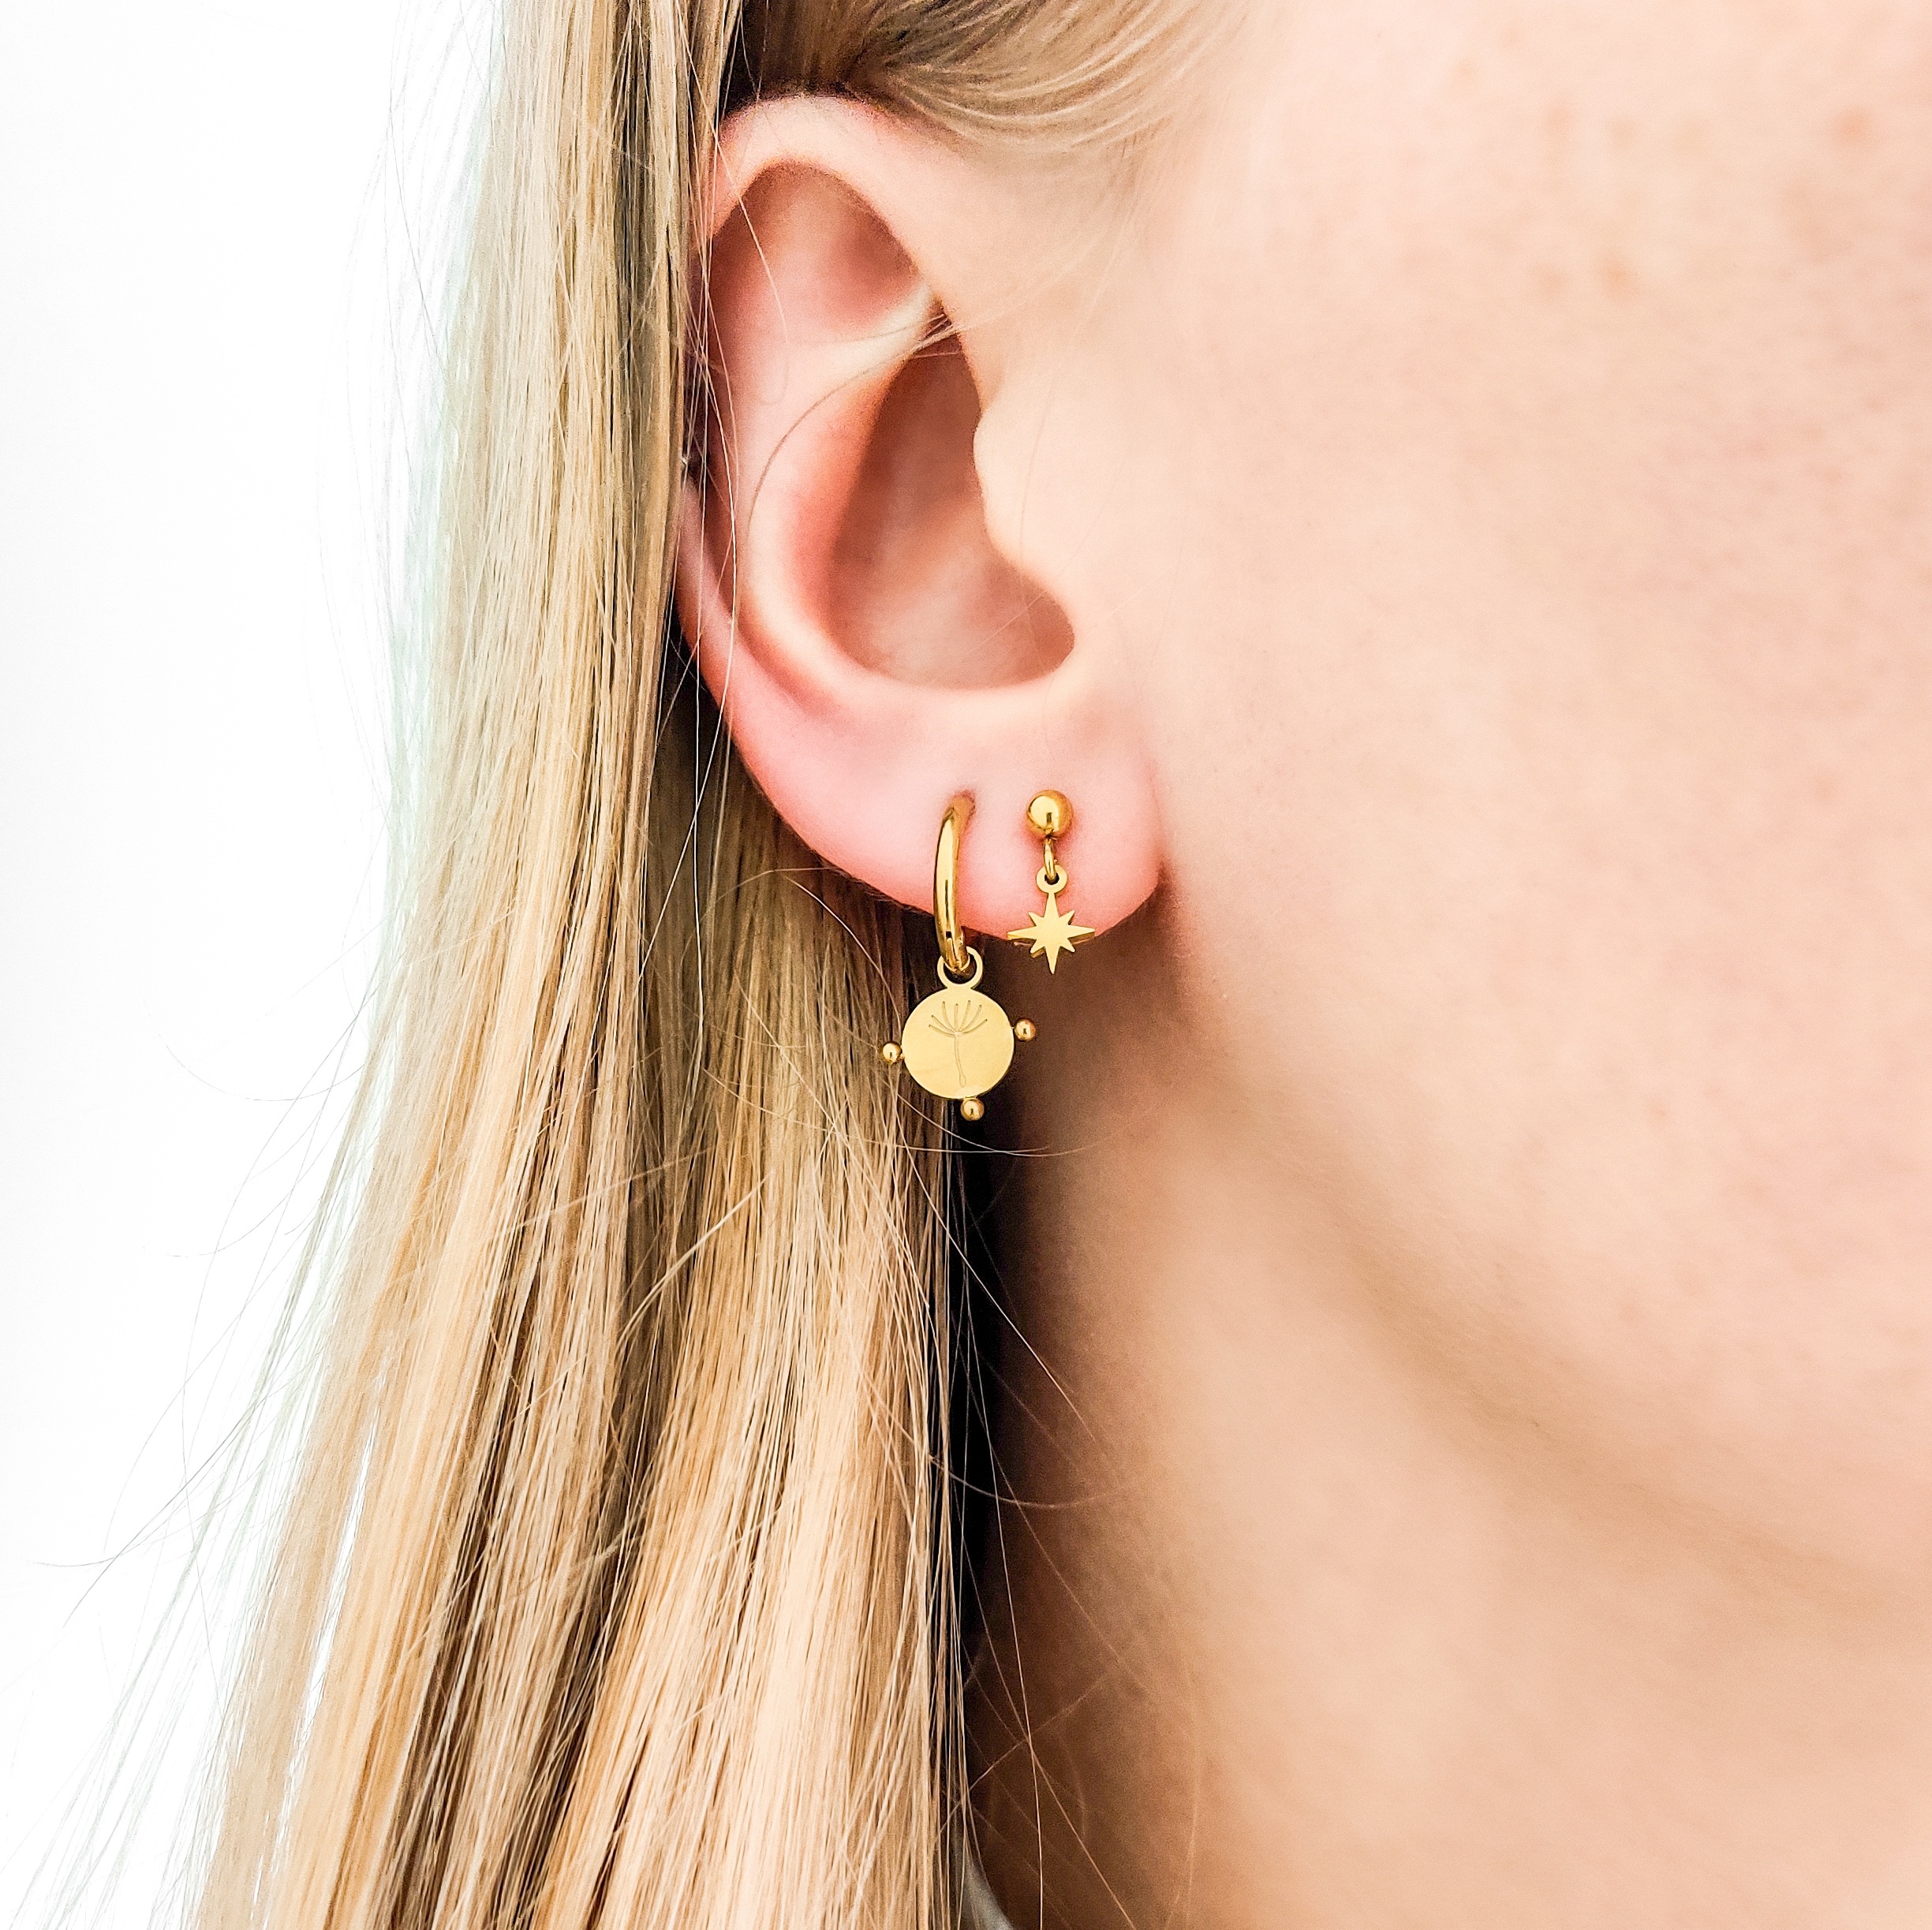 Earrings small with pendant dandelion